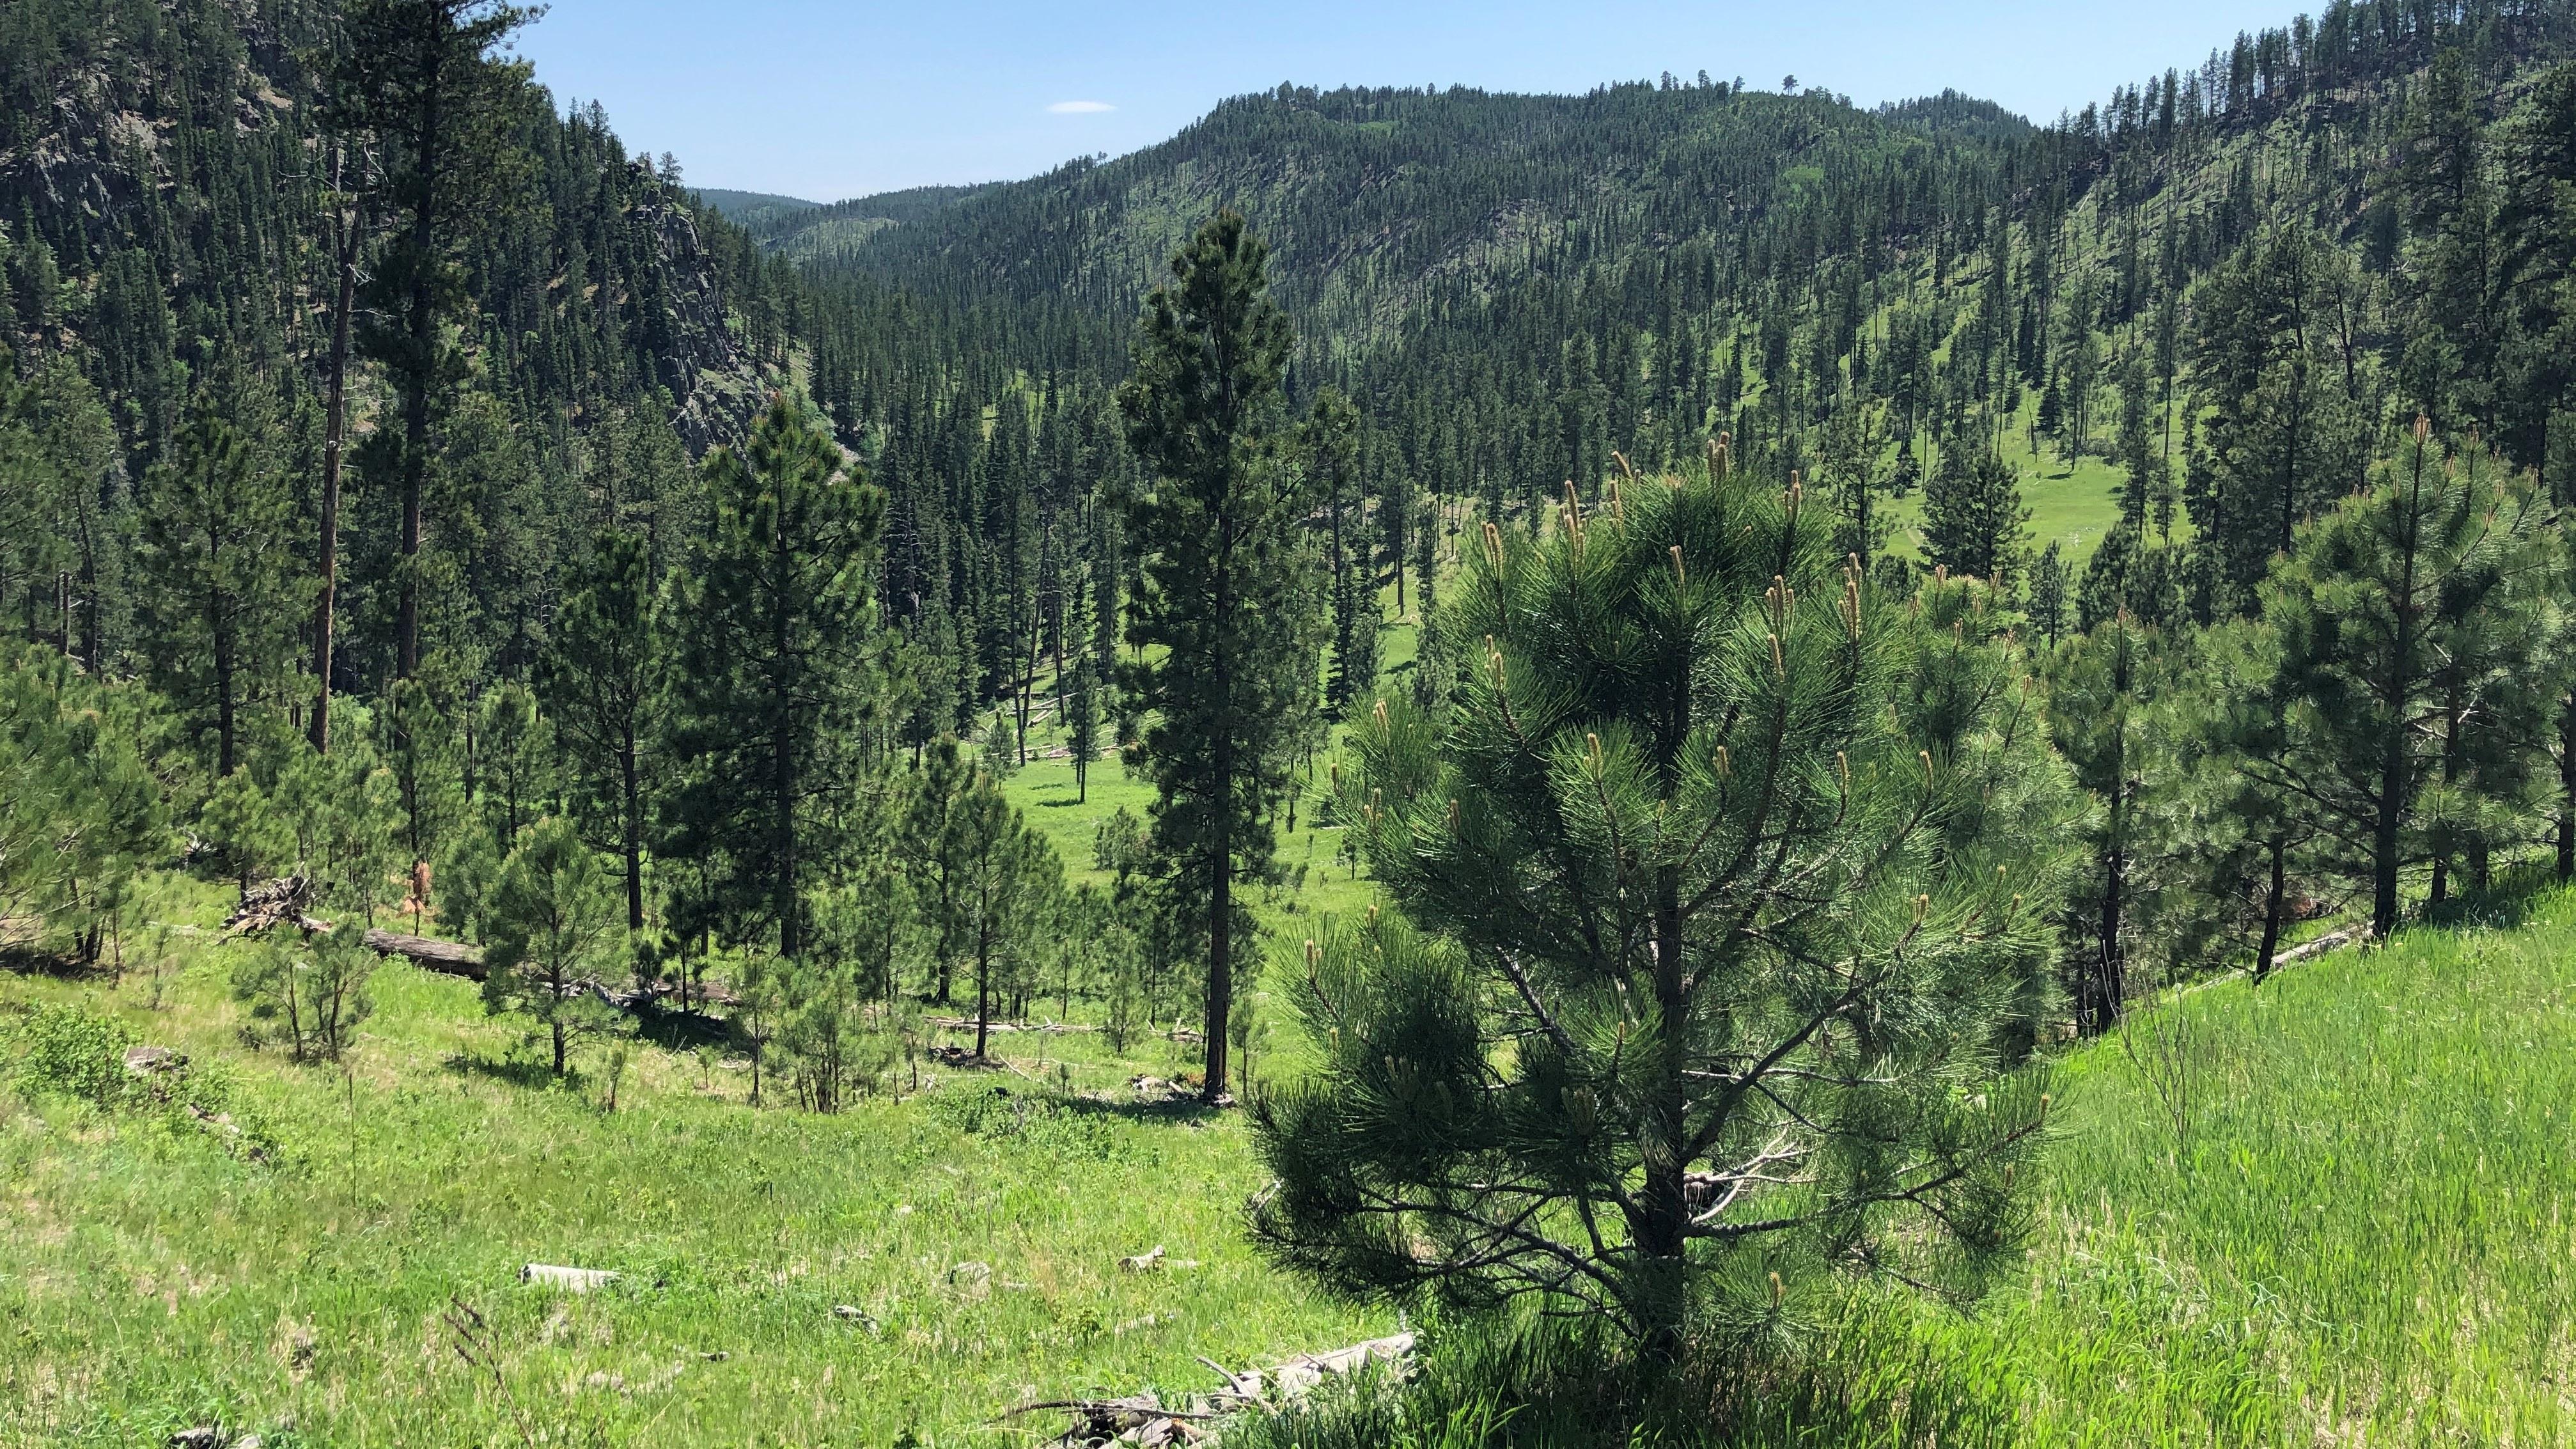 2983b26660 Trees In Black Hills National Forest.JPG